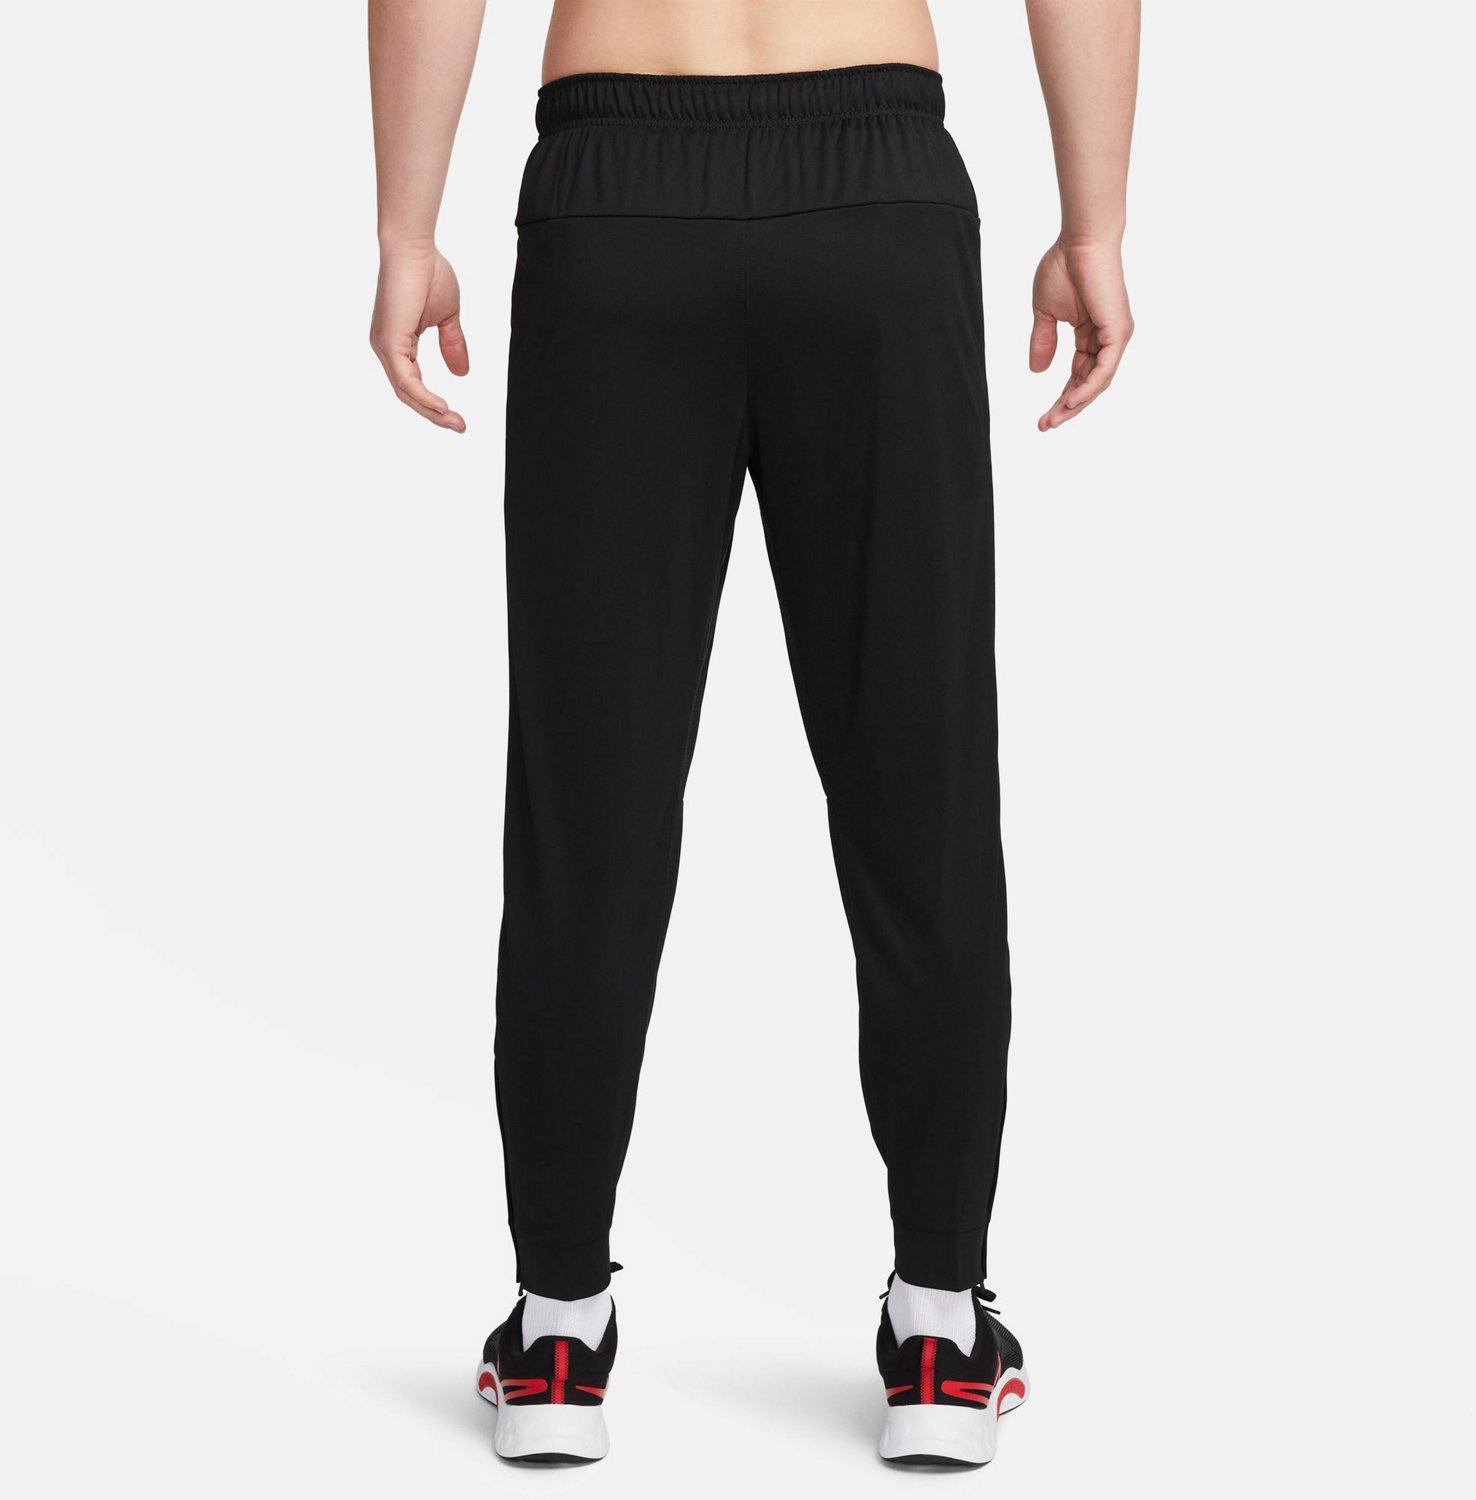 Nike Men's Totality Dri-FIT Tapered Pants